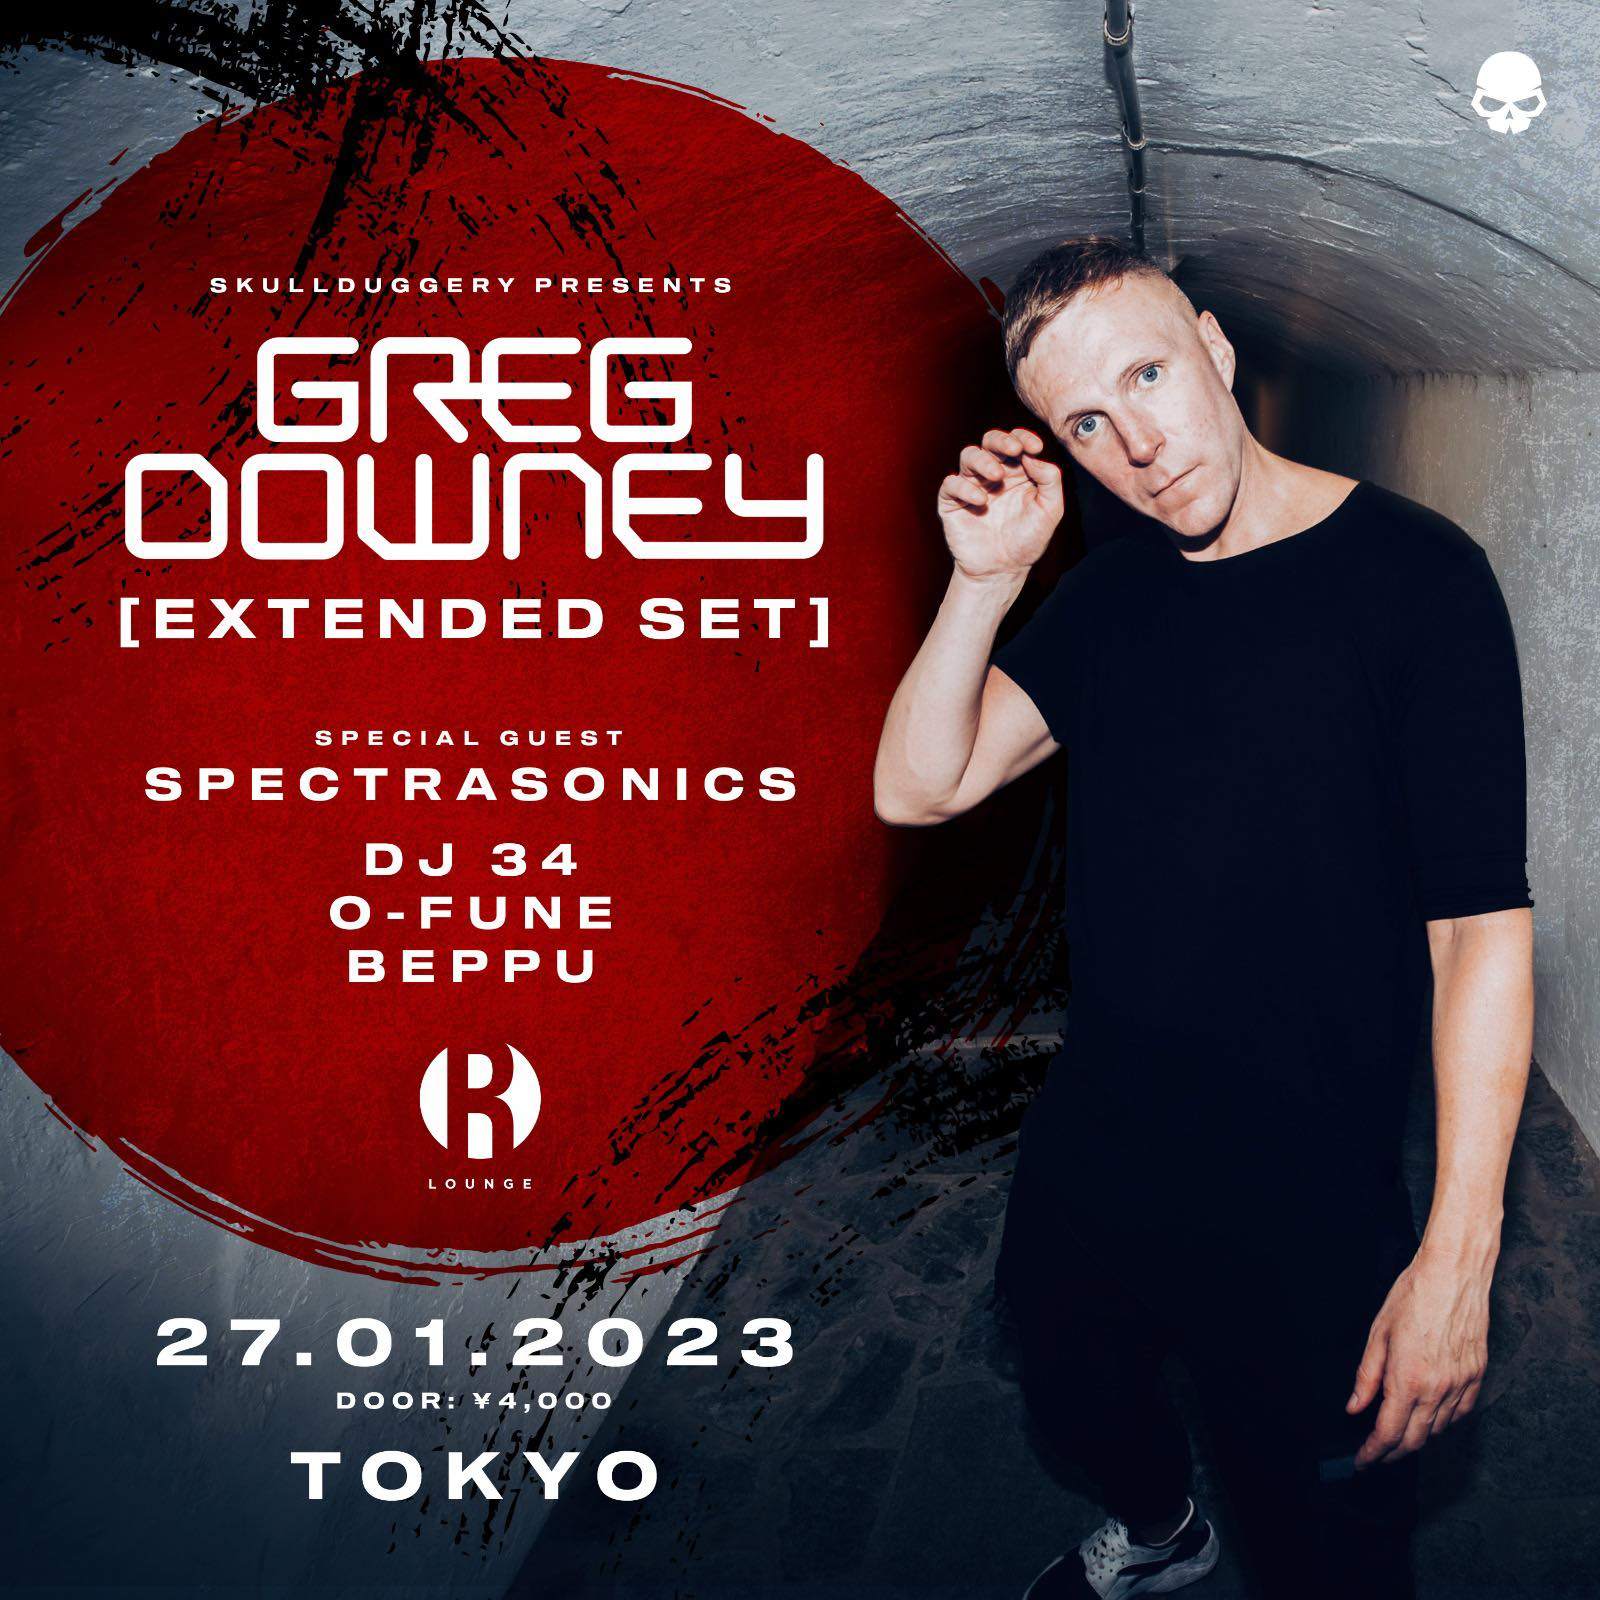 SKULLDUGGERY presents GREG DOWNEY (Extended Set) at R Lounge, Tokyo